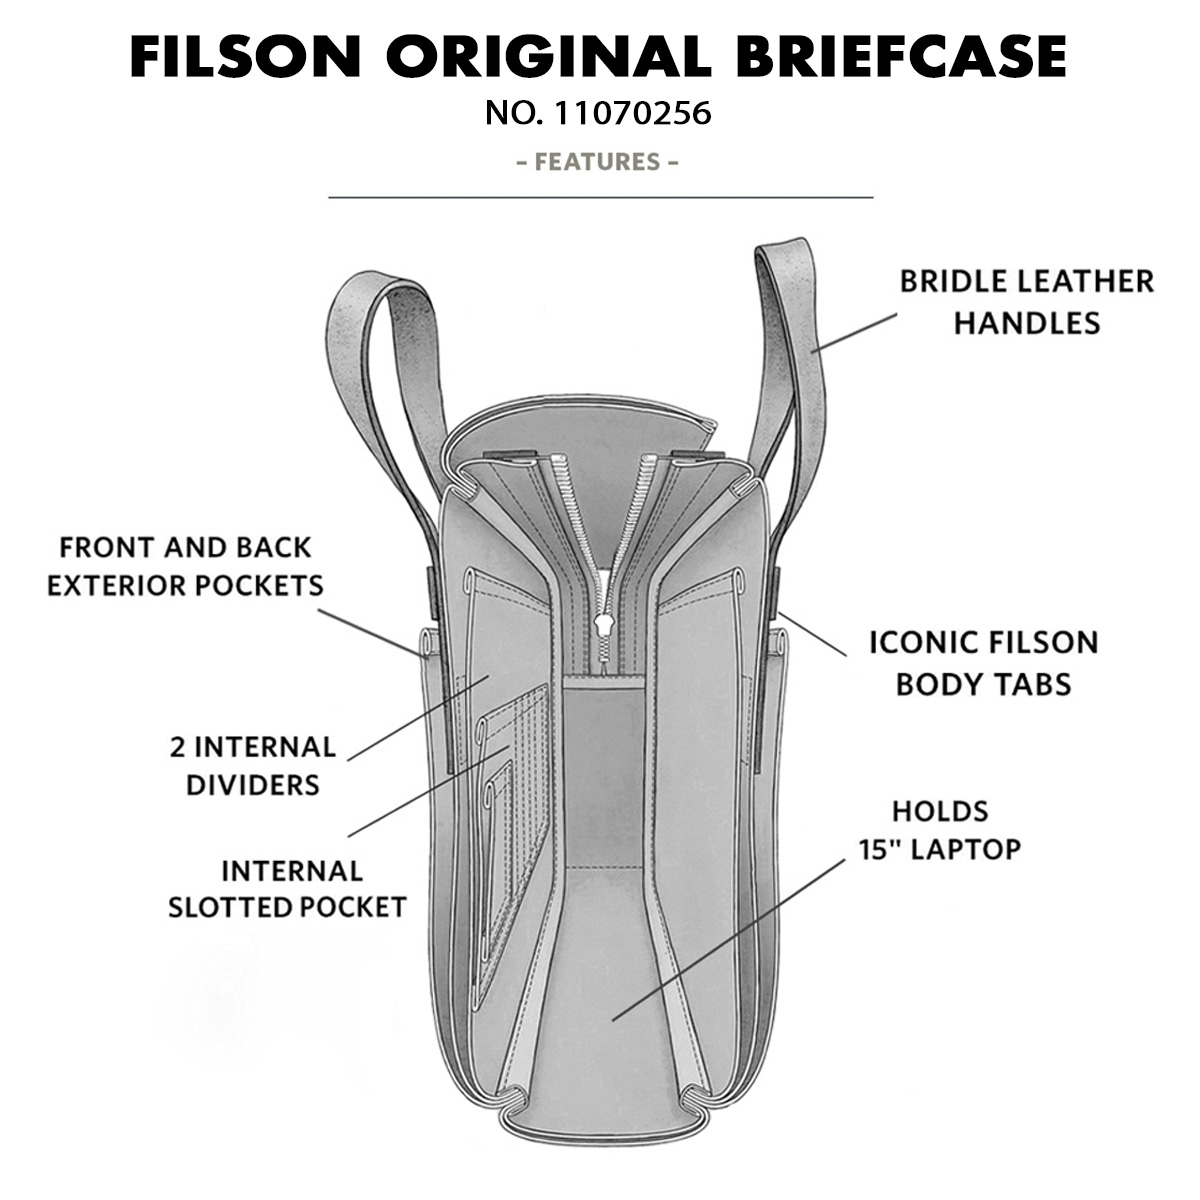 Filson Original Briefcase 11070256 Black, features